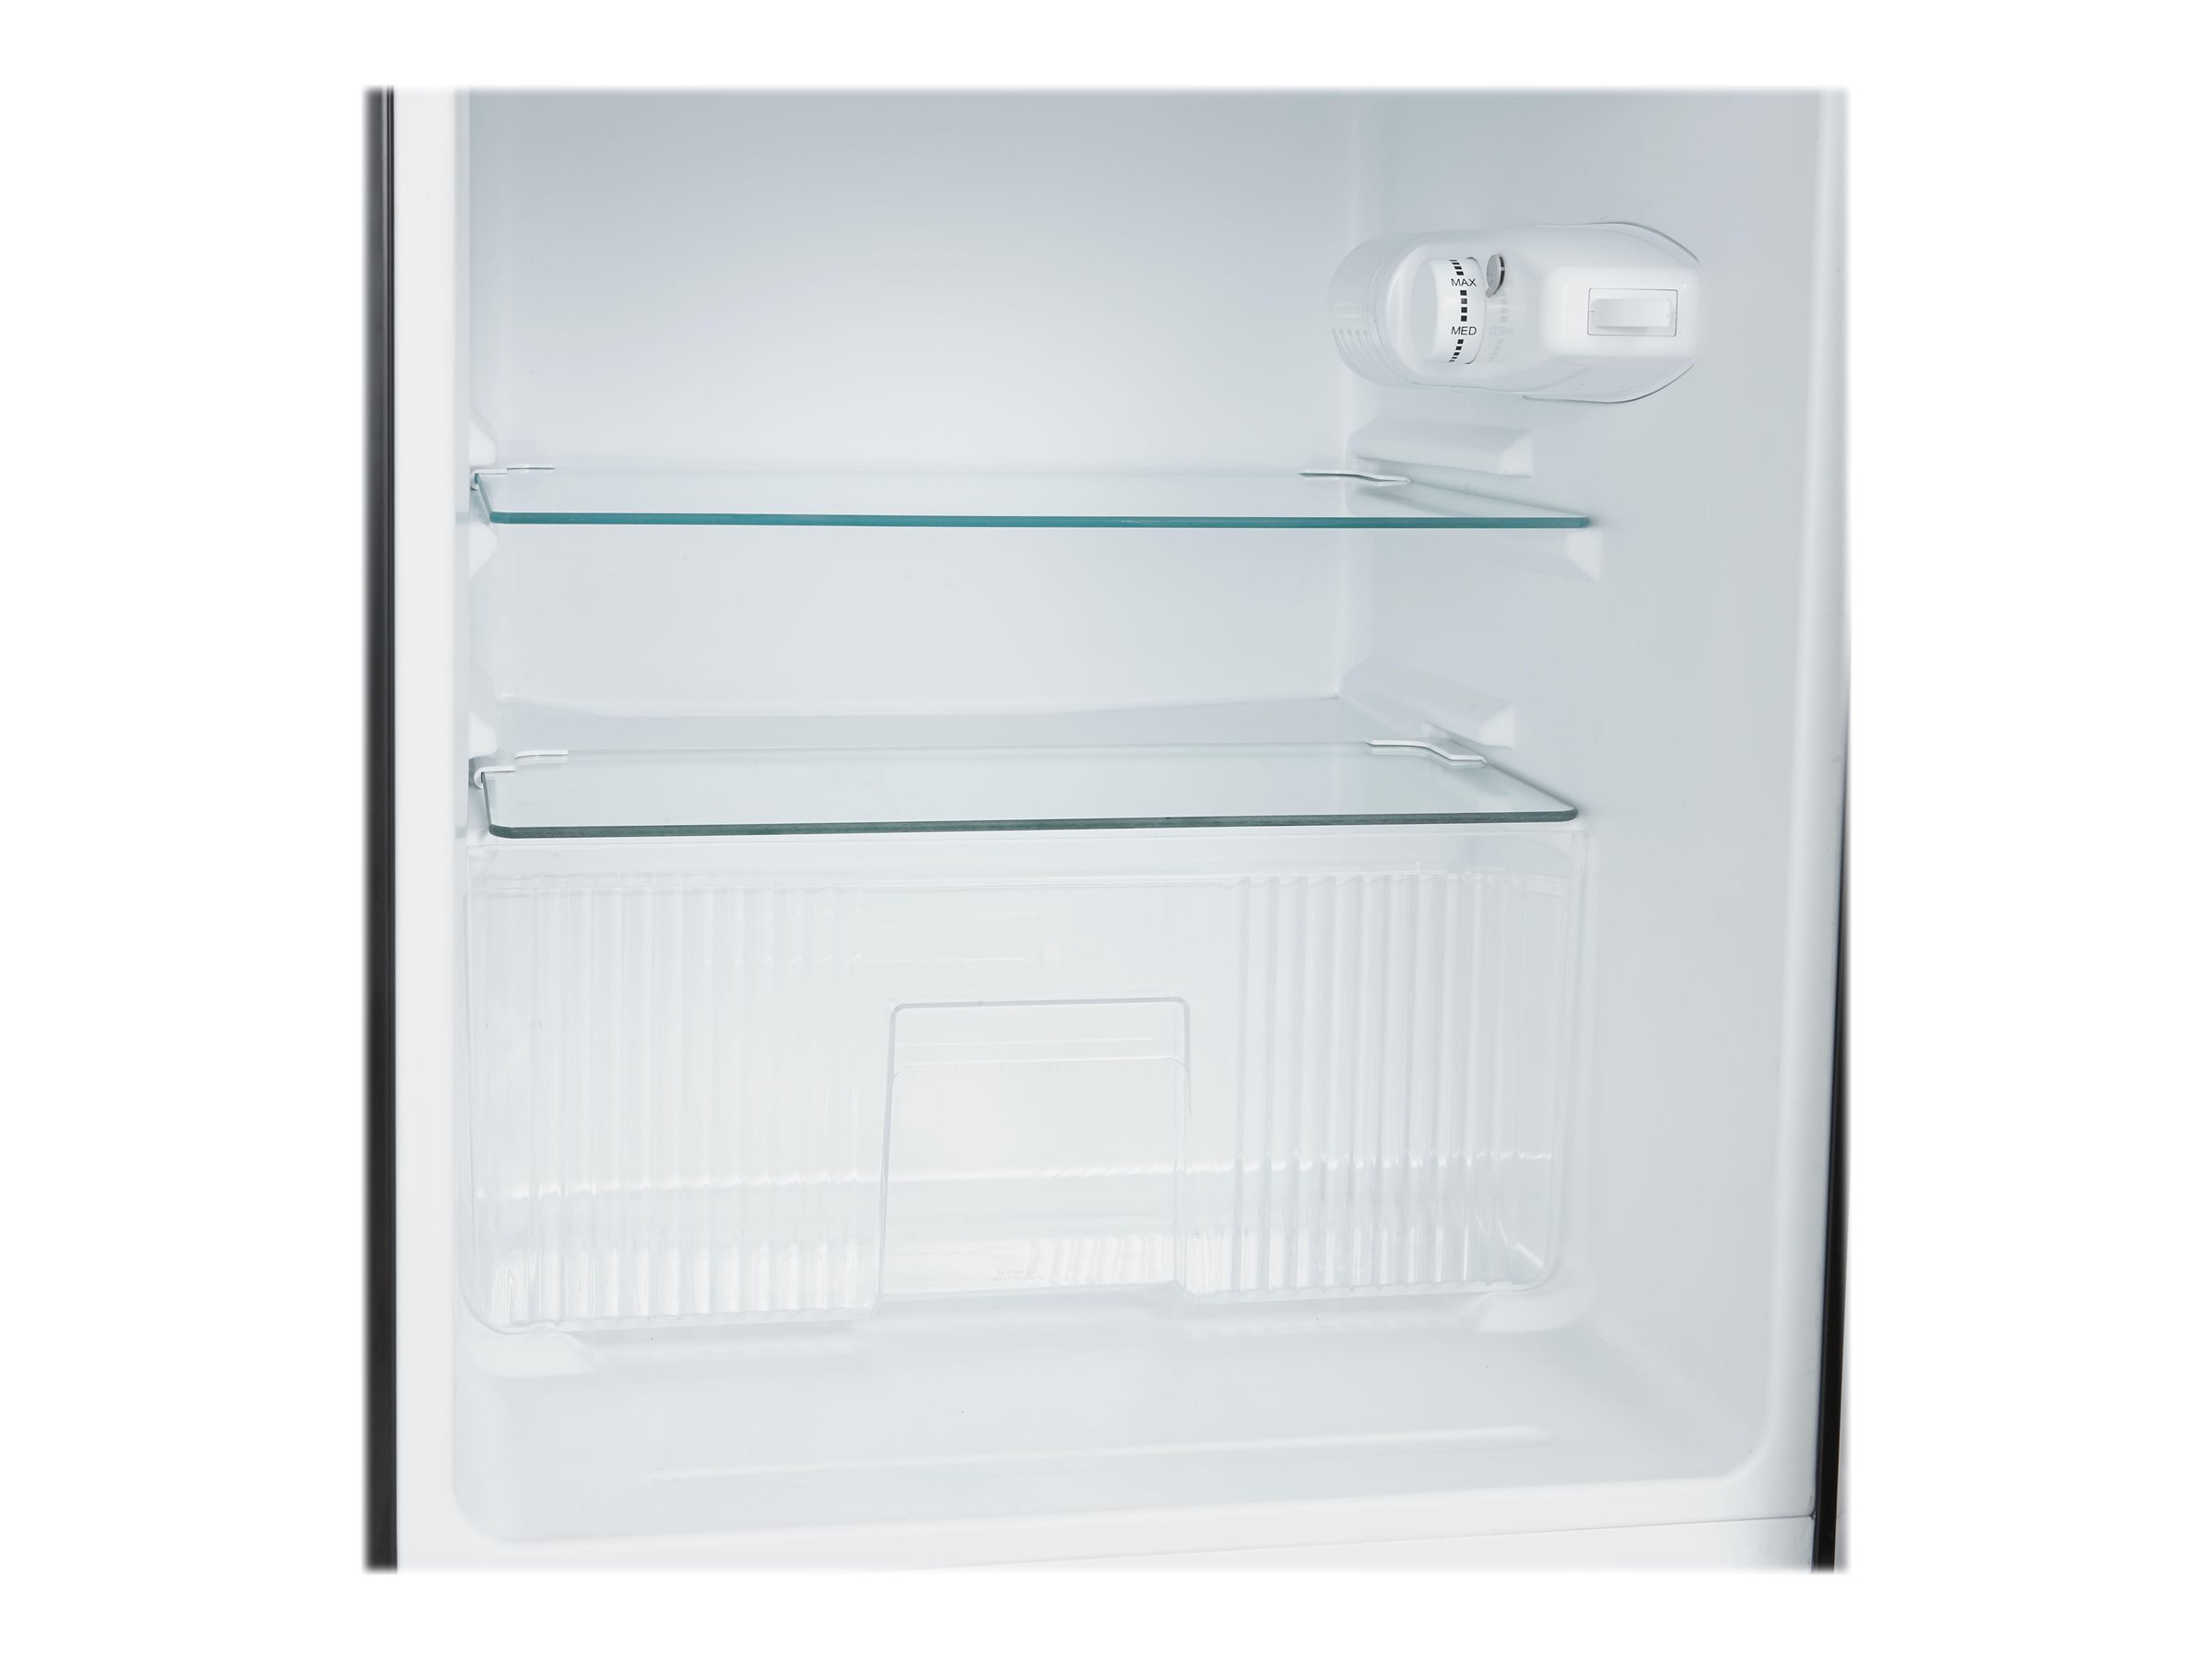 Whynter MRF-340DS Refrigerator Freezer Freestanding Width 19 in, Depth 23 in, Height 33 in Top-Freezer, Stainless Steel - image 5 of 6